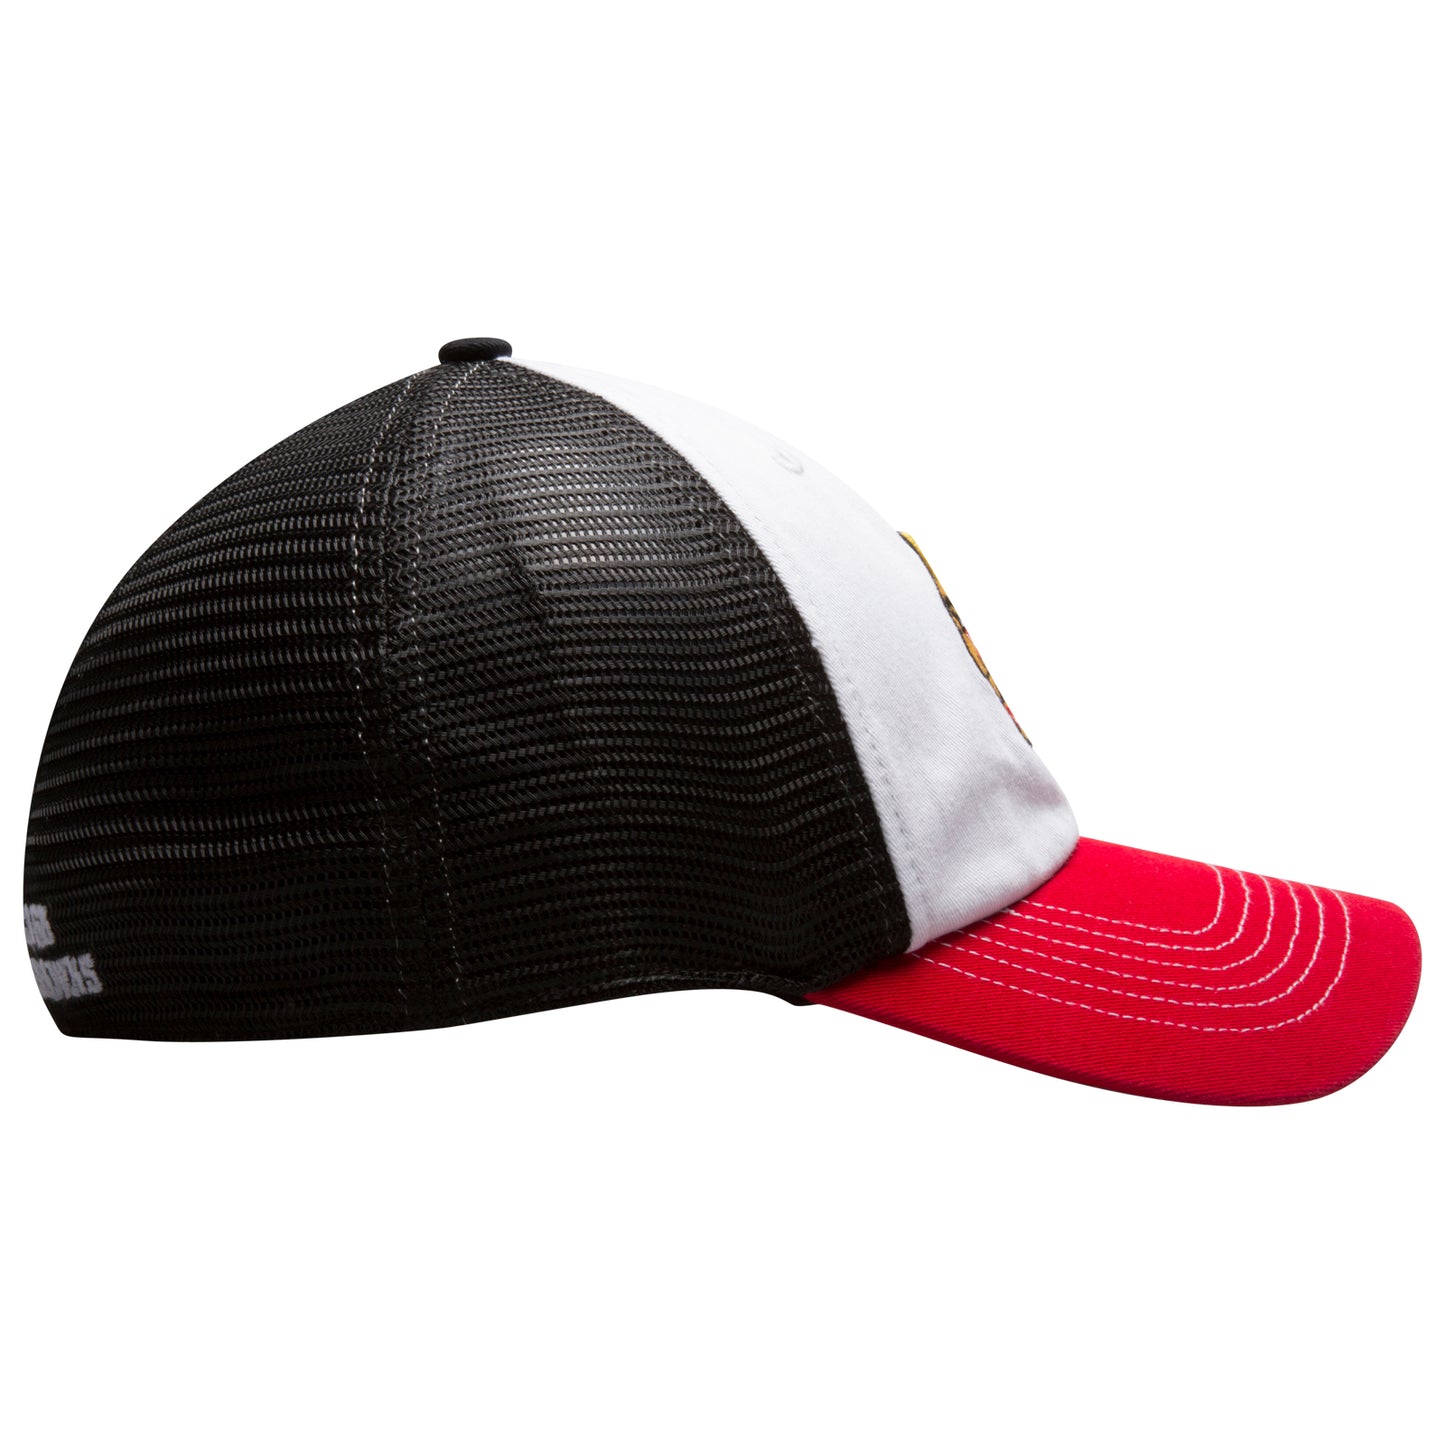 Chicago Blackhawks Tri-Color Primary Logo Mesh Back Flex Fit Hat